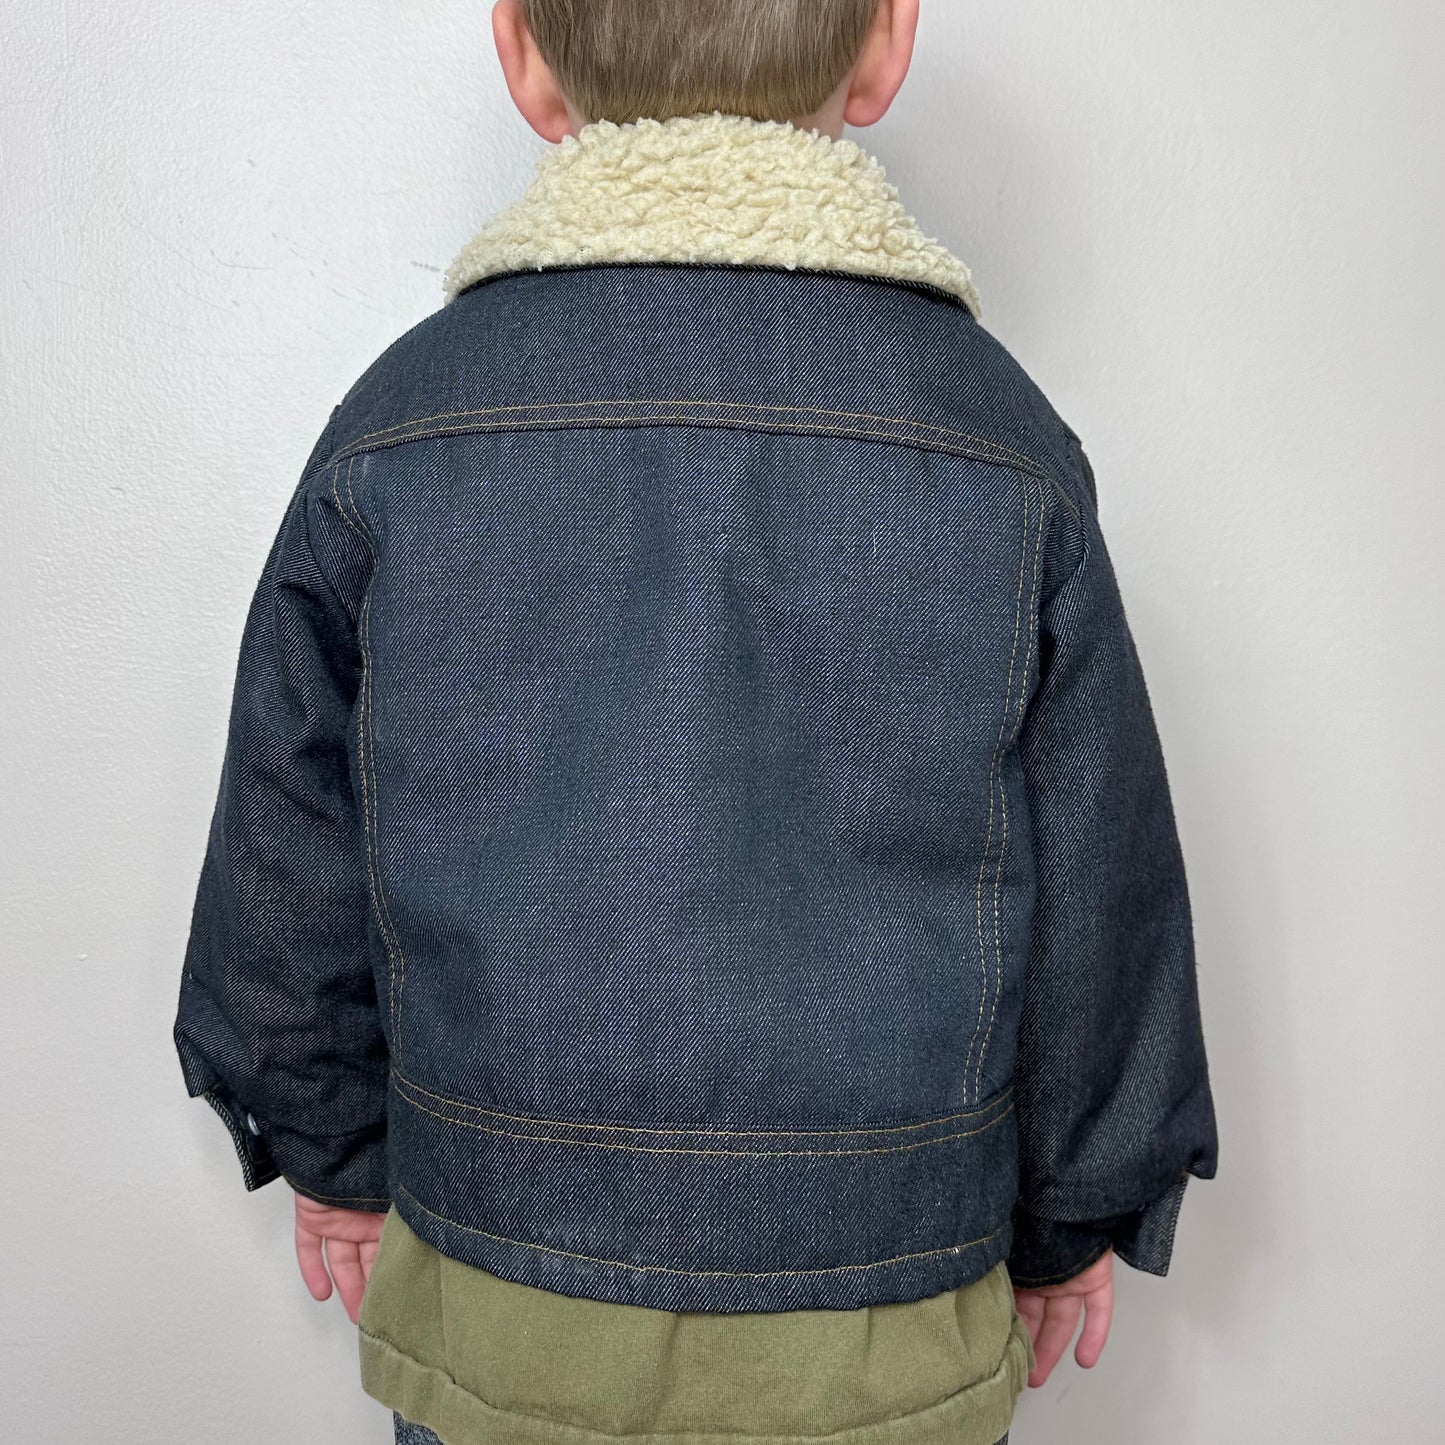 1970s Kids Sherpa Lined Denim Jacket, Sears Toughskins Size 6/7